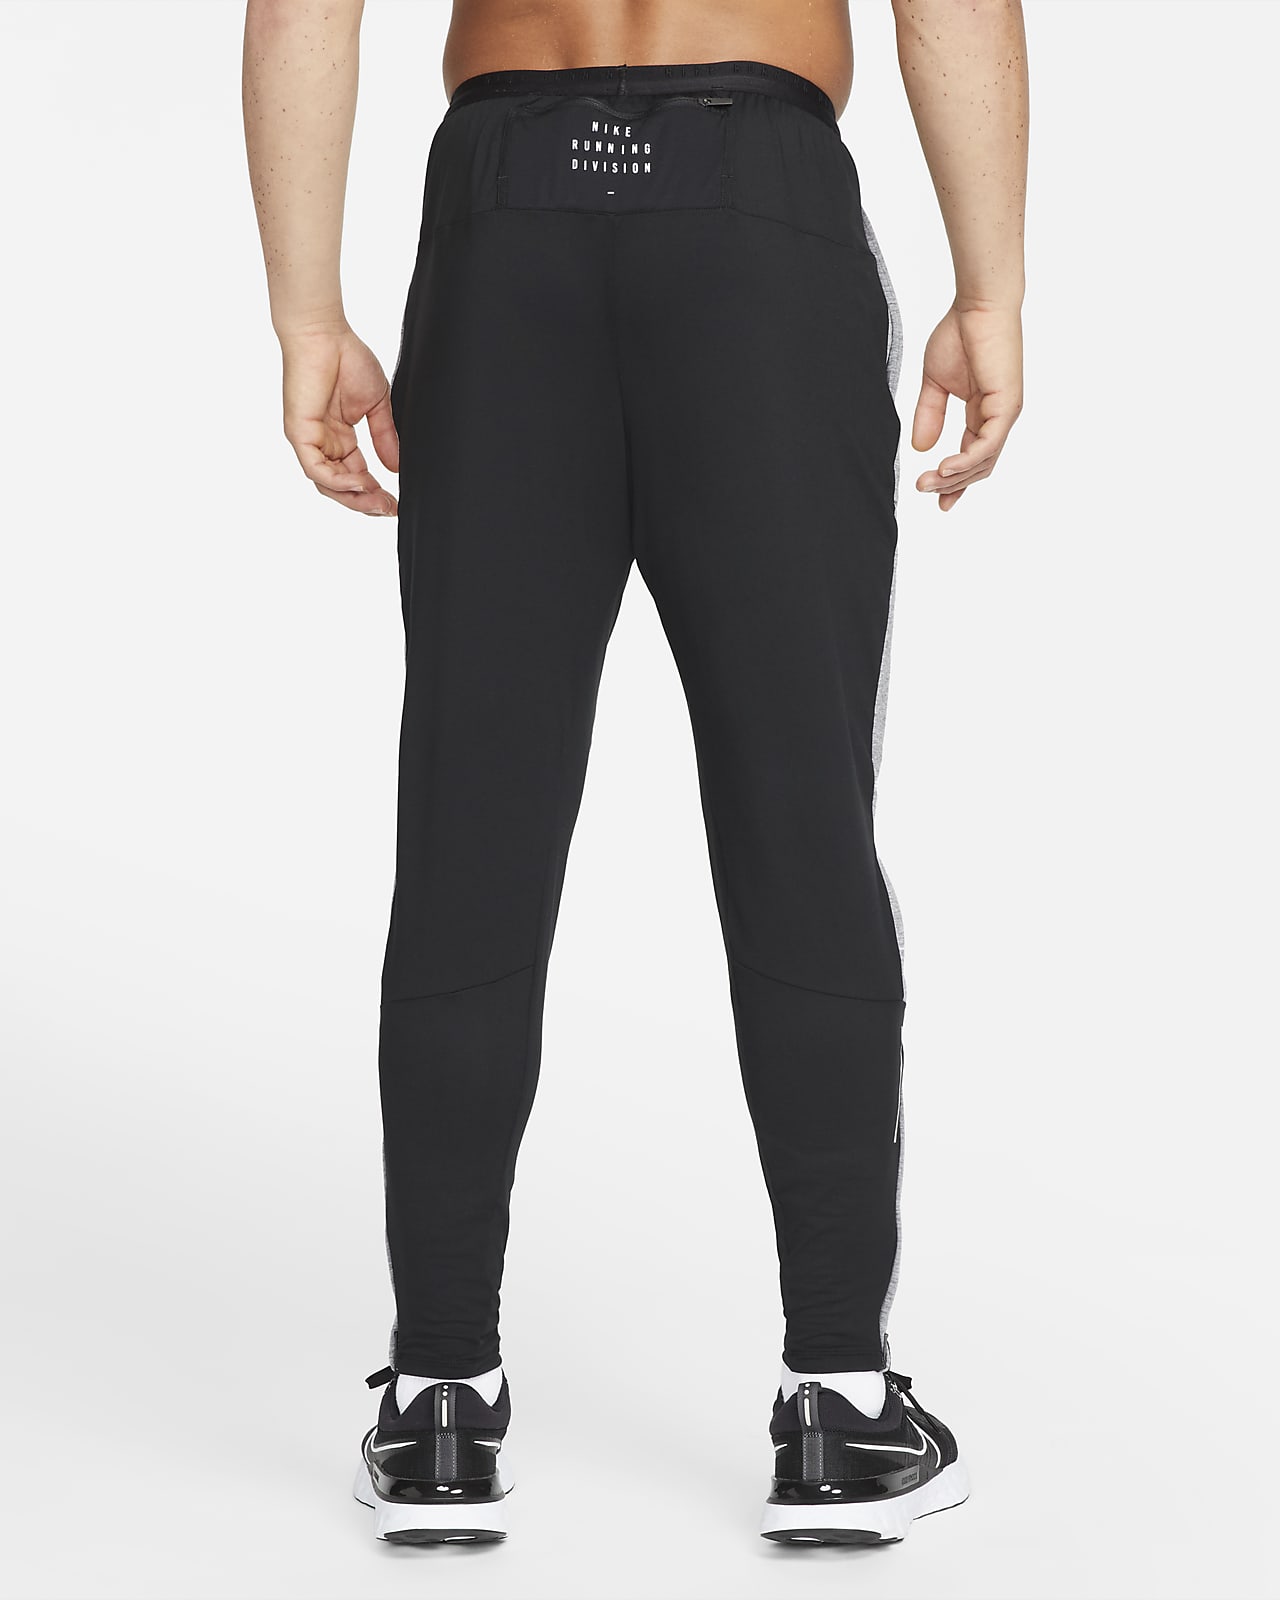 Nike PHENOM ELITE KNIT Men's Running Trousers Pants Black CV7437 010 | eBay